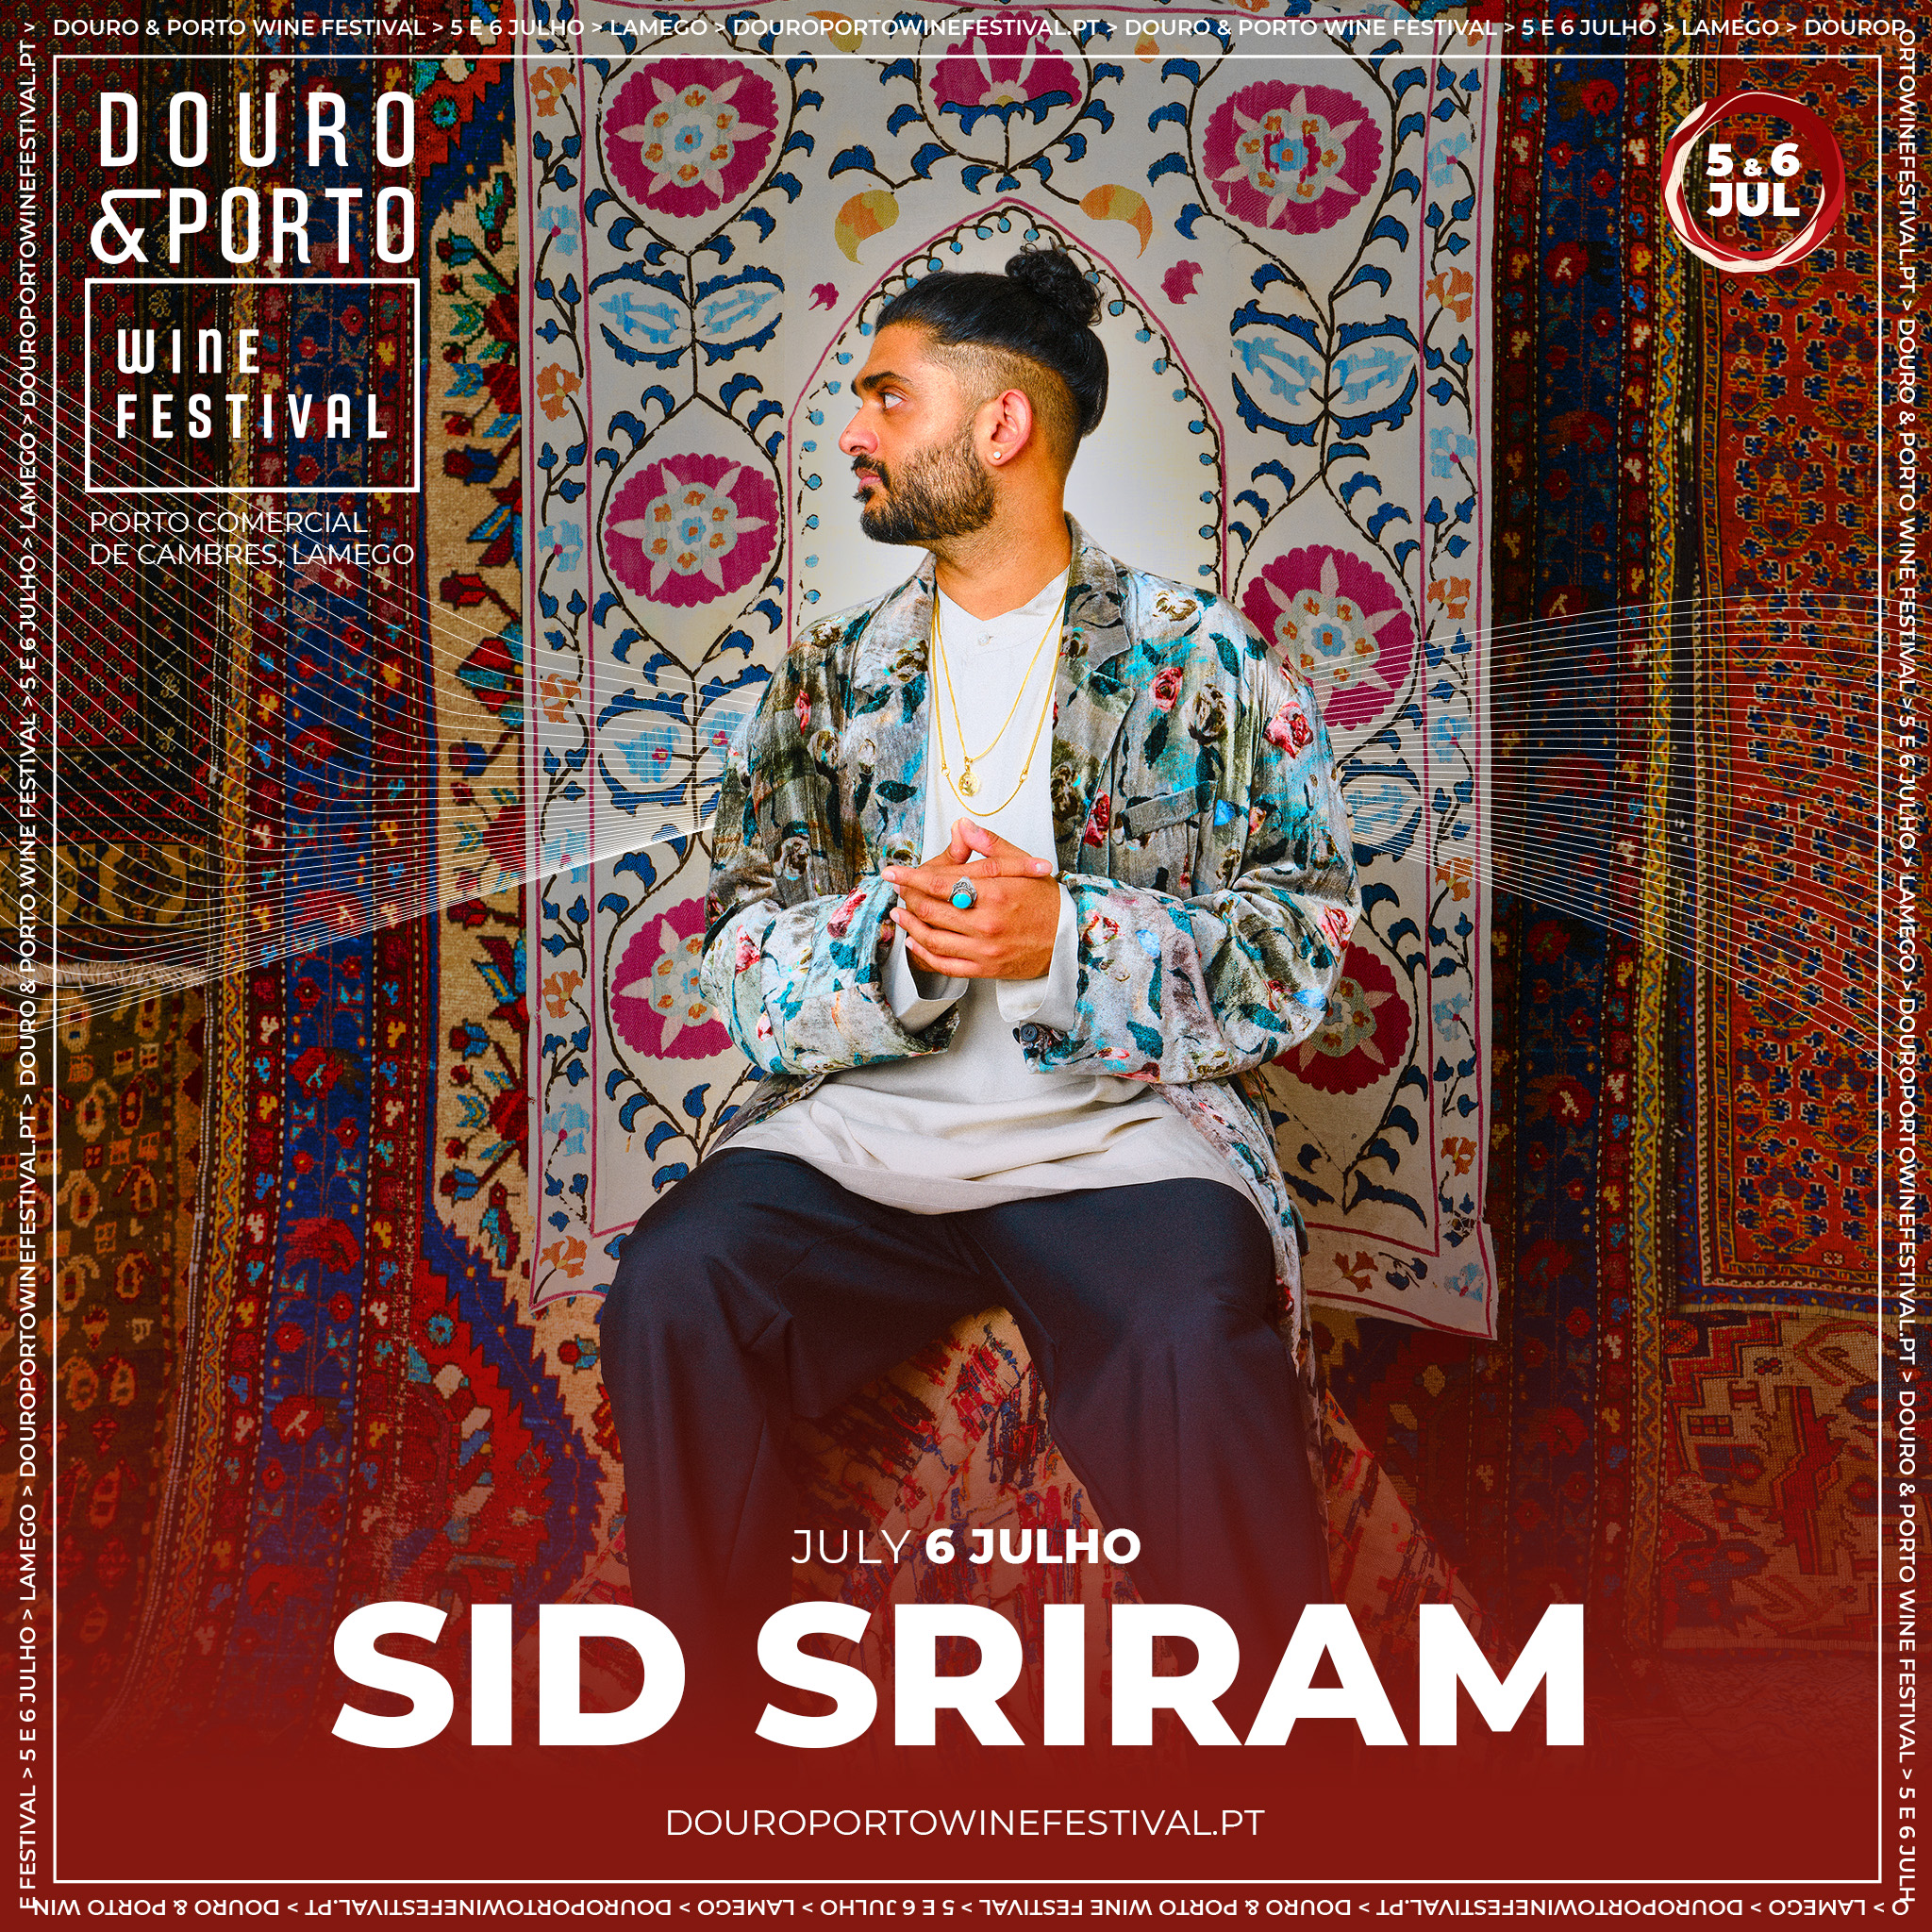 DOURO PORTO WINE FESTIVAL - Sid Sriram